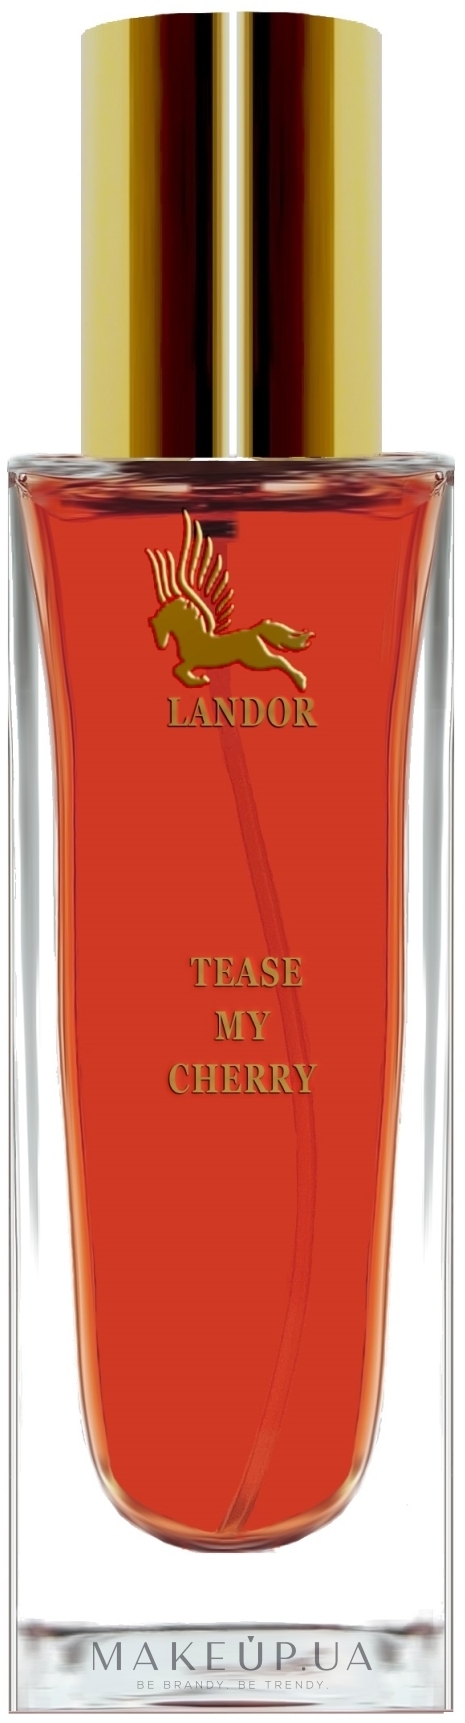 Landor Tease Me Cherry